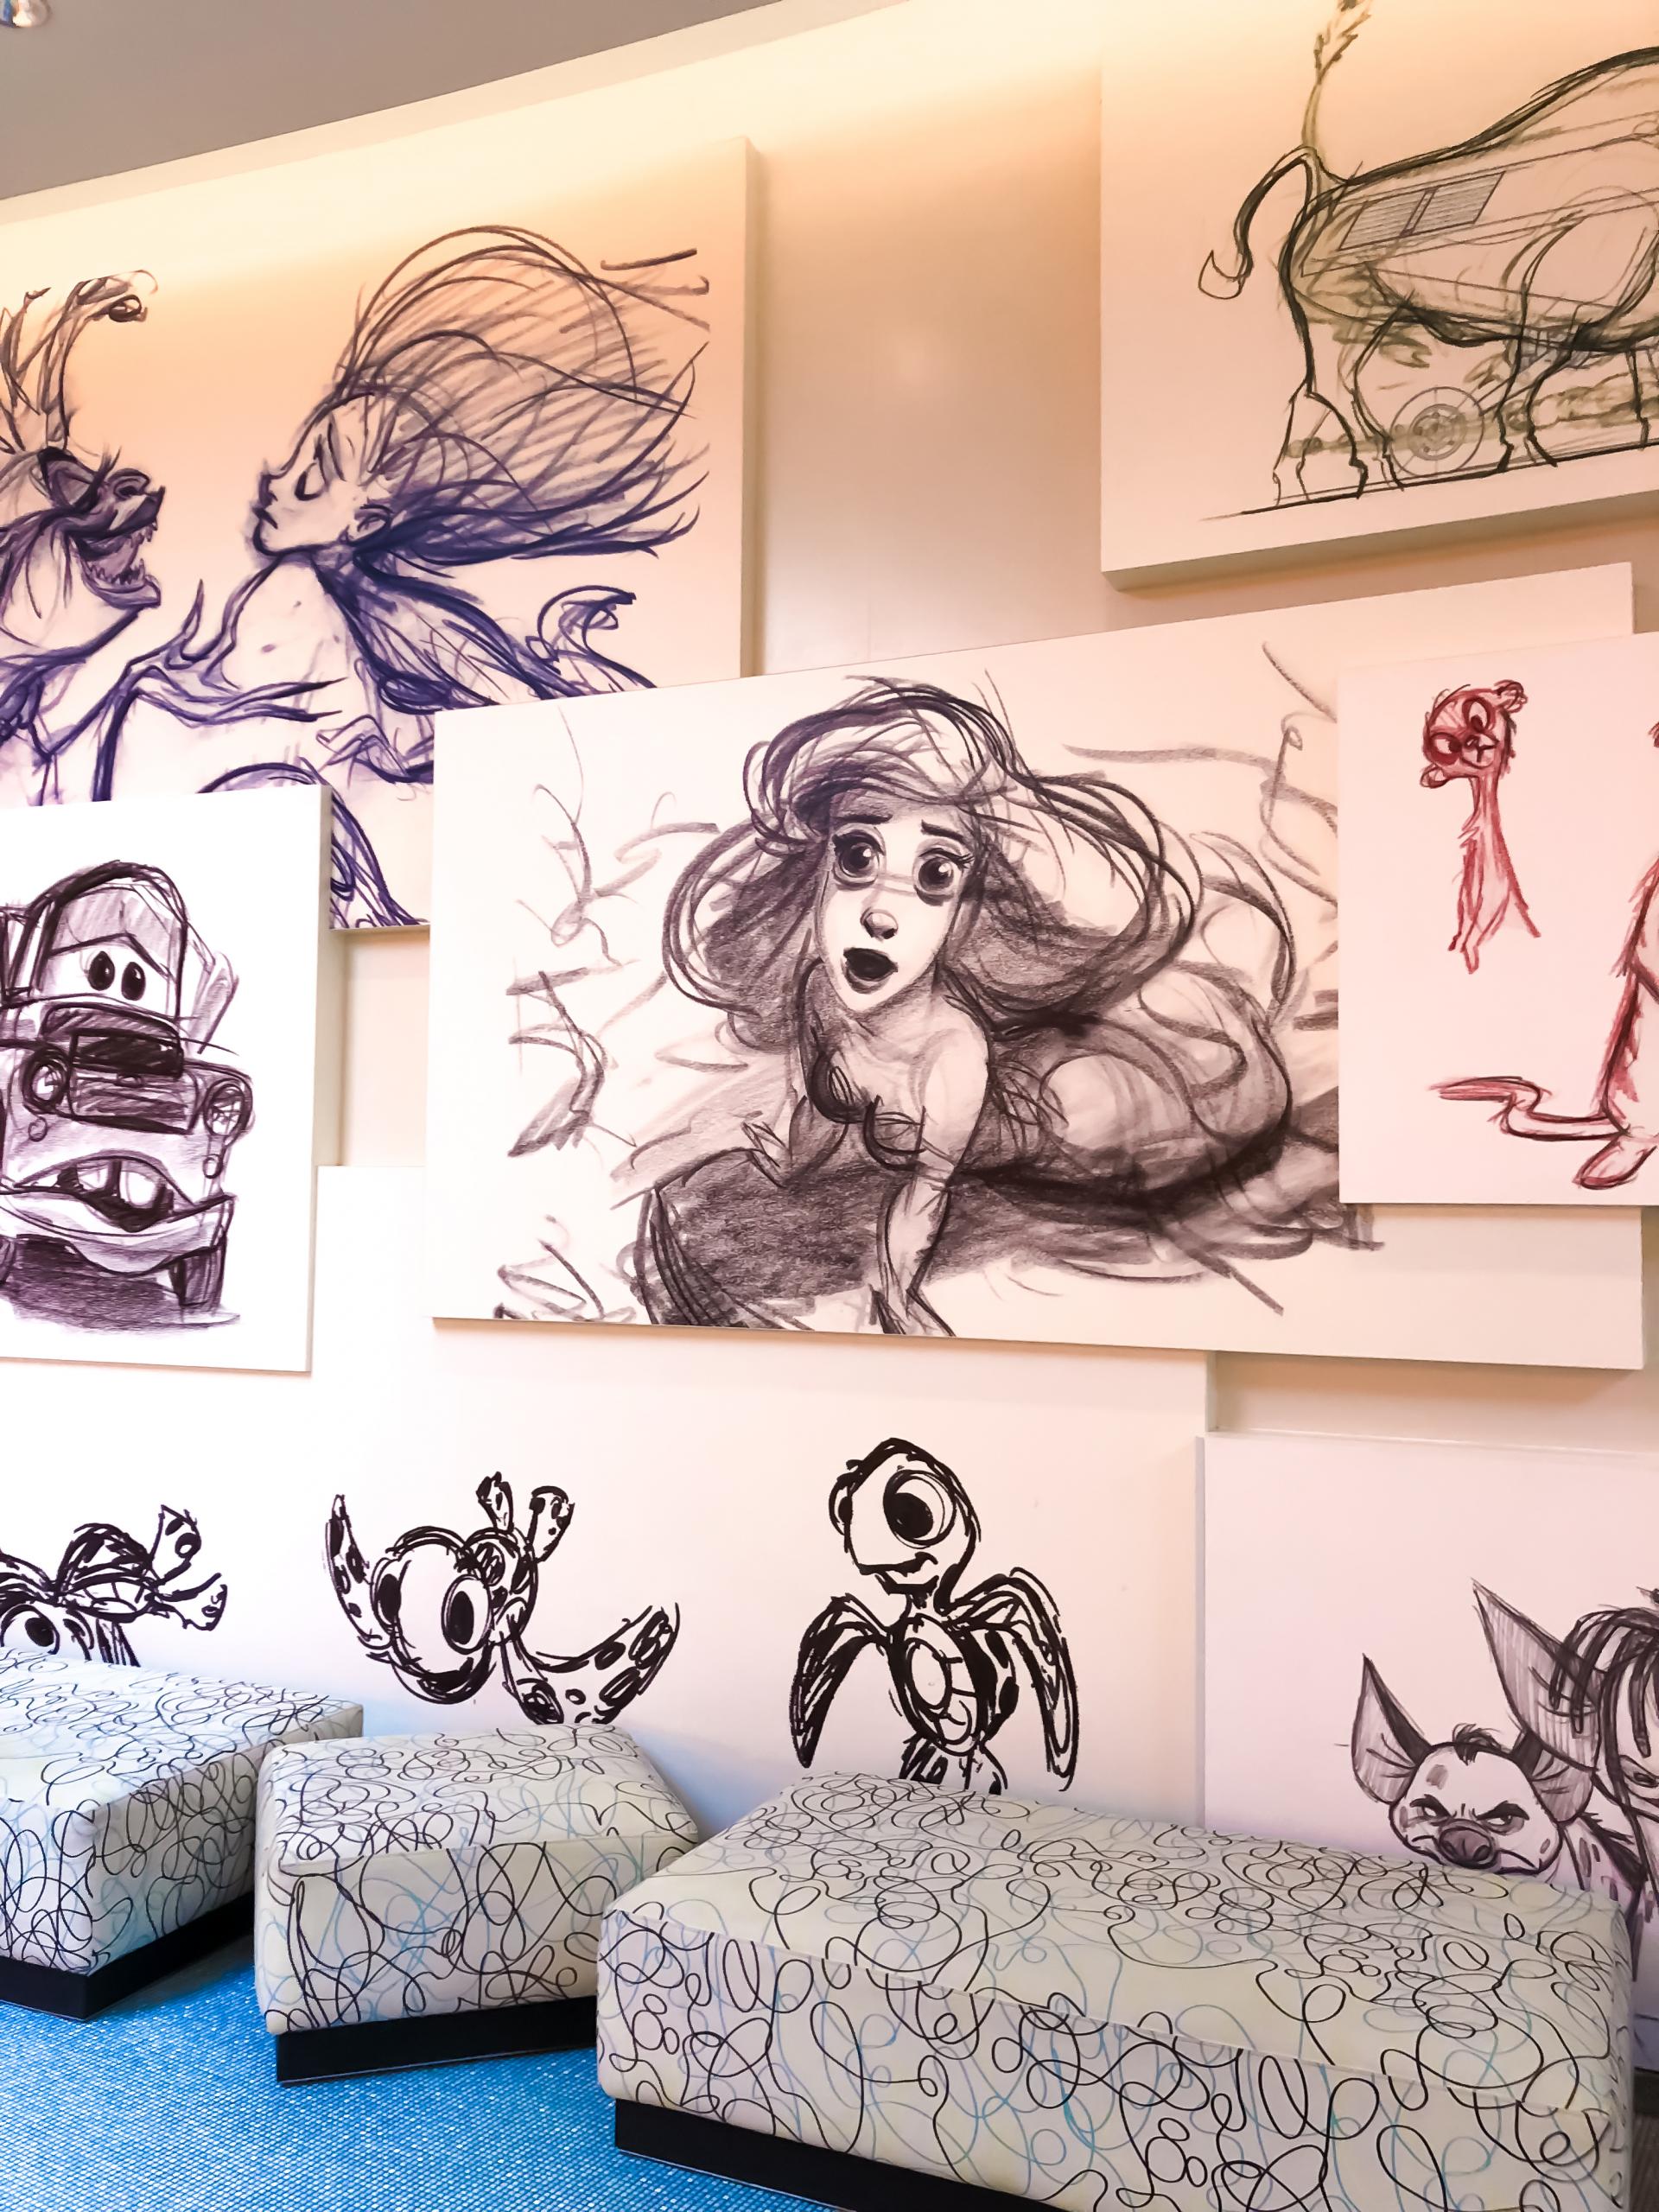 Lobby at Art of Animation